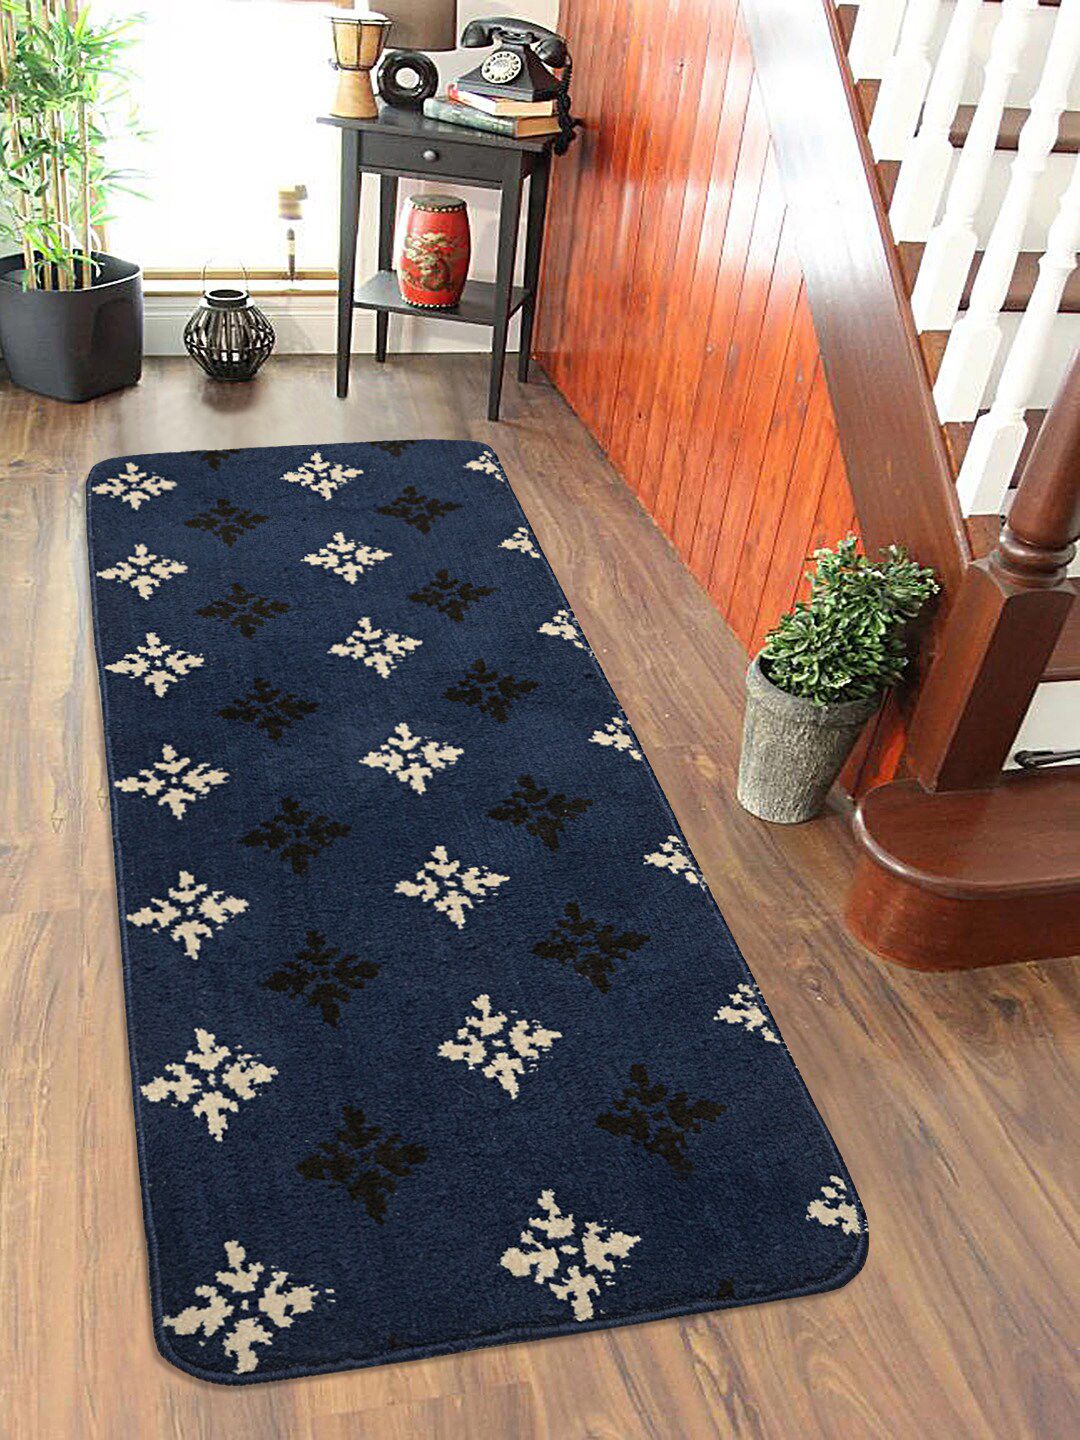 Saral Home Blue & Black Antiskid Floor Runner Price in India